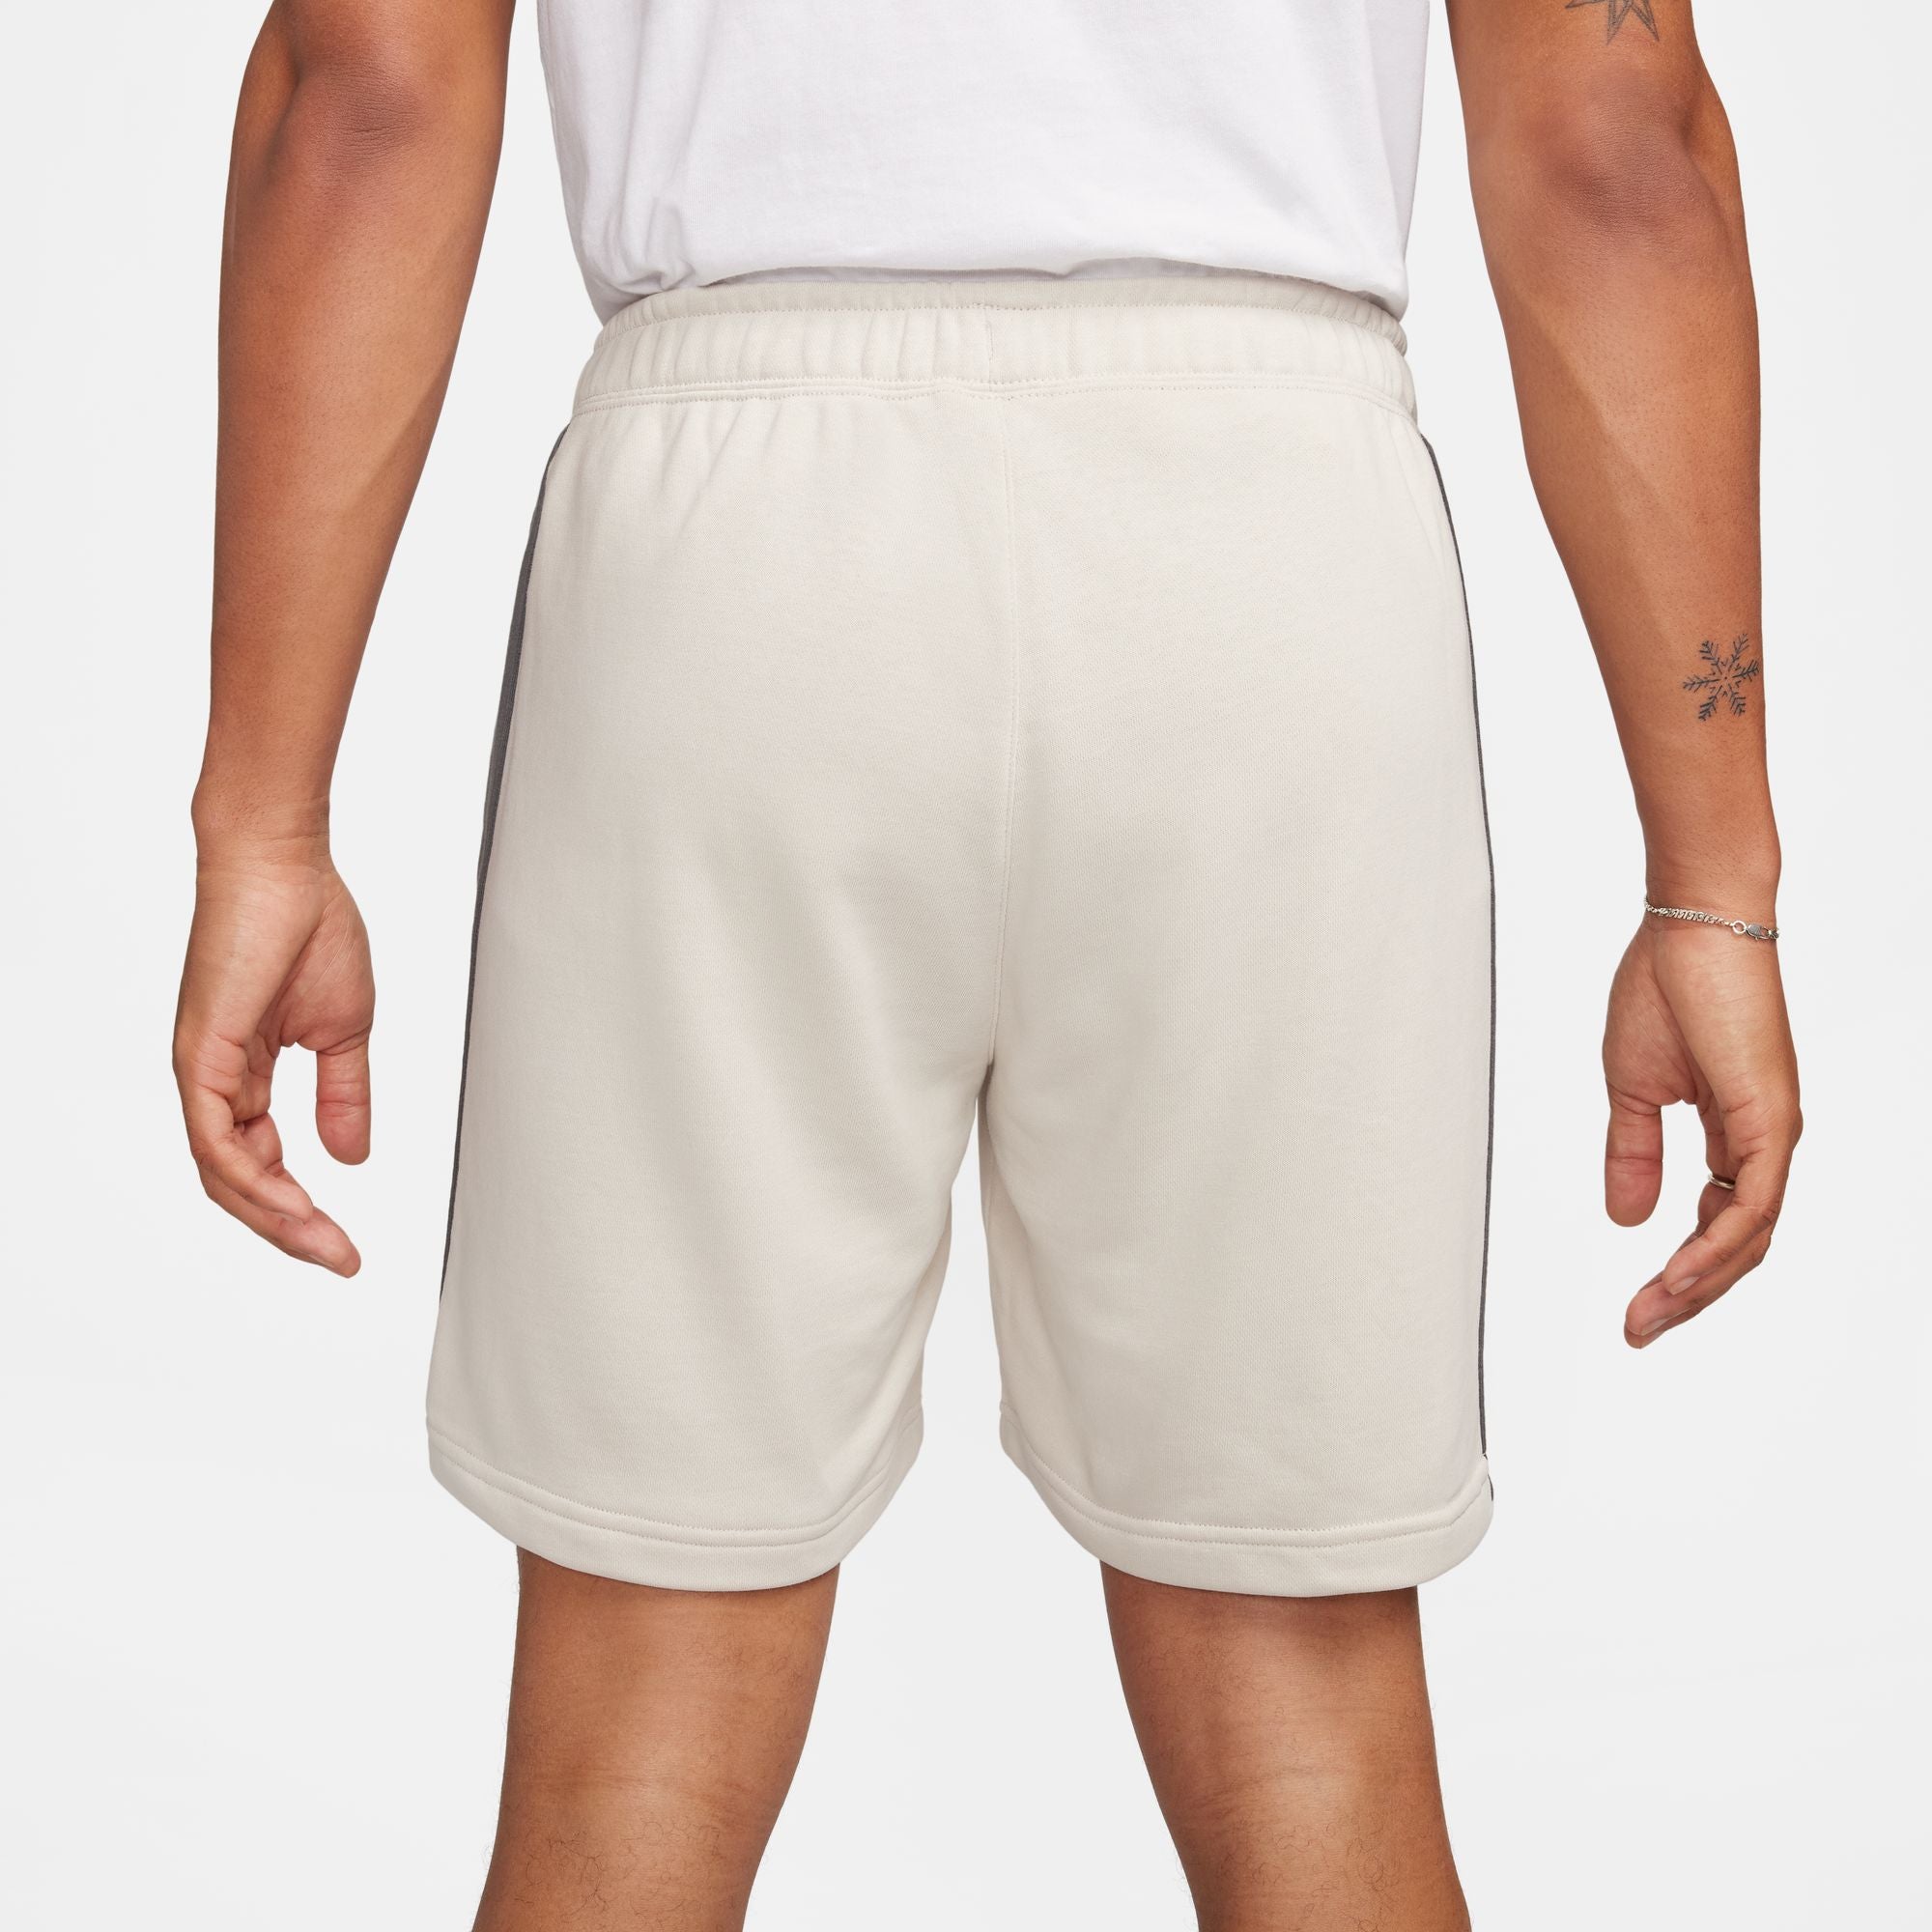 Nike Swoosh Air Fleece Shorts - Beige